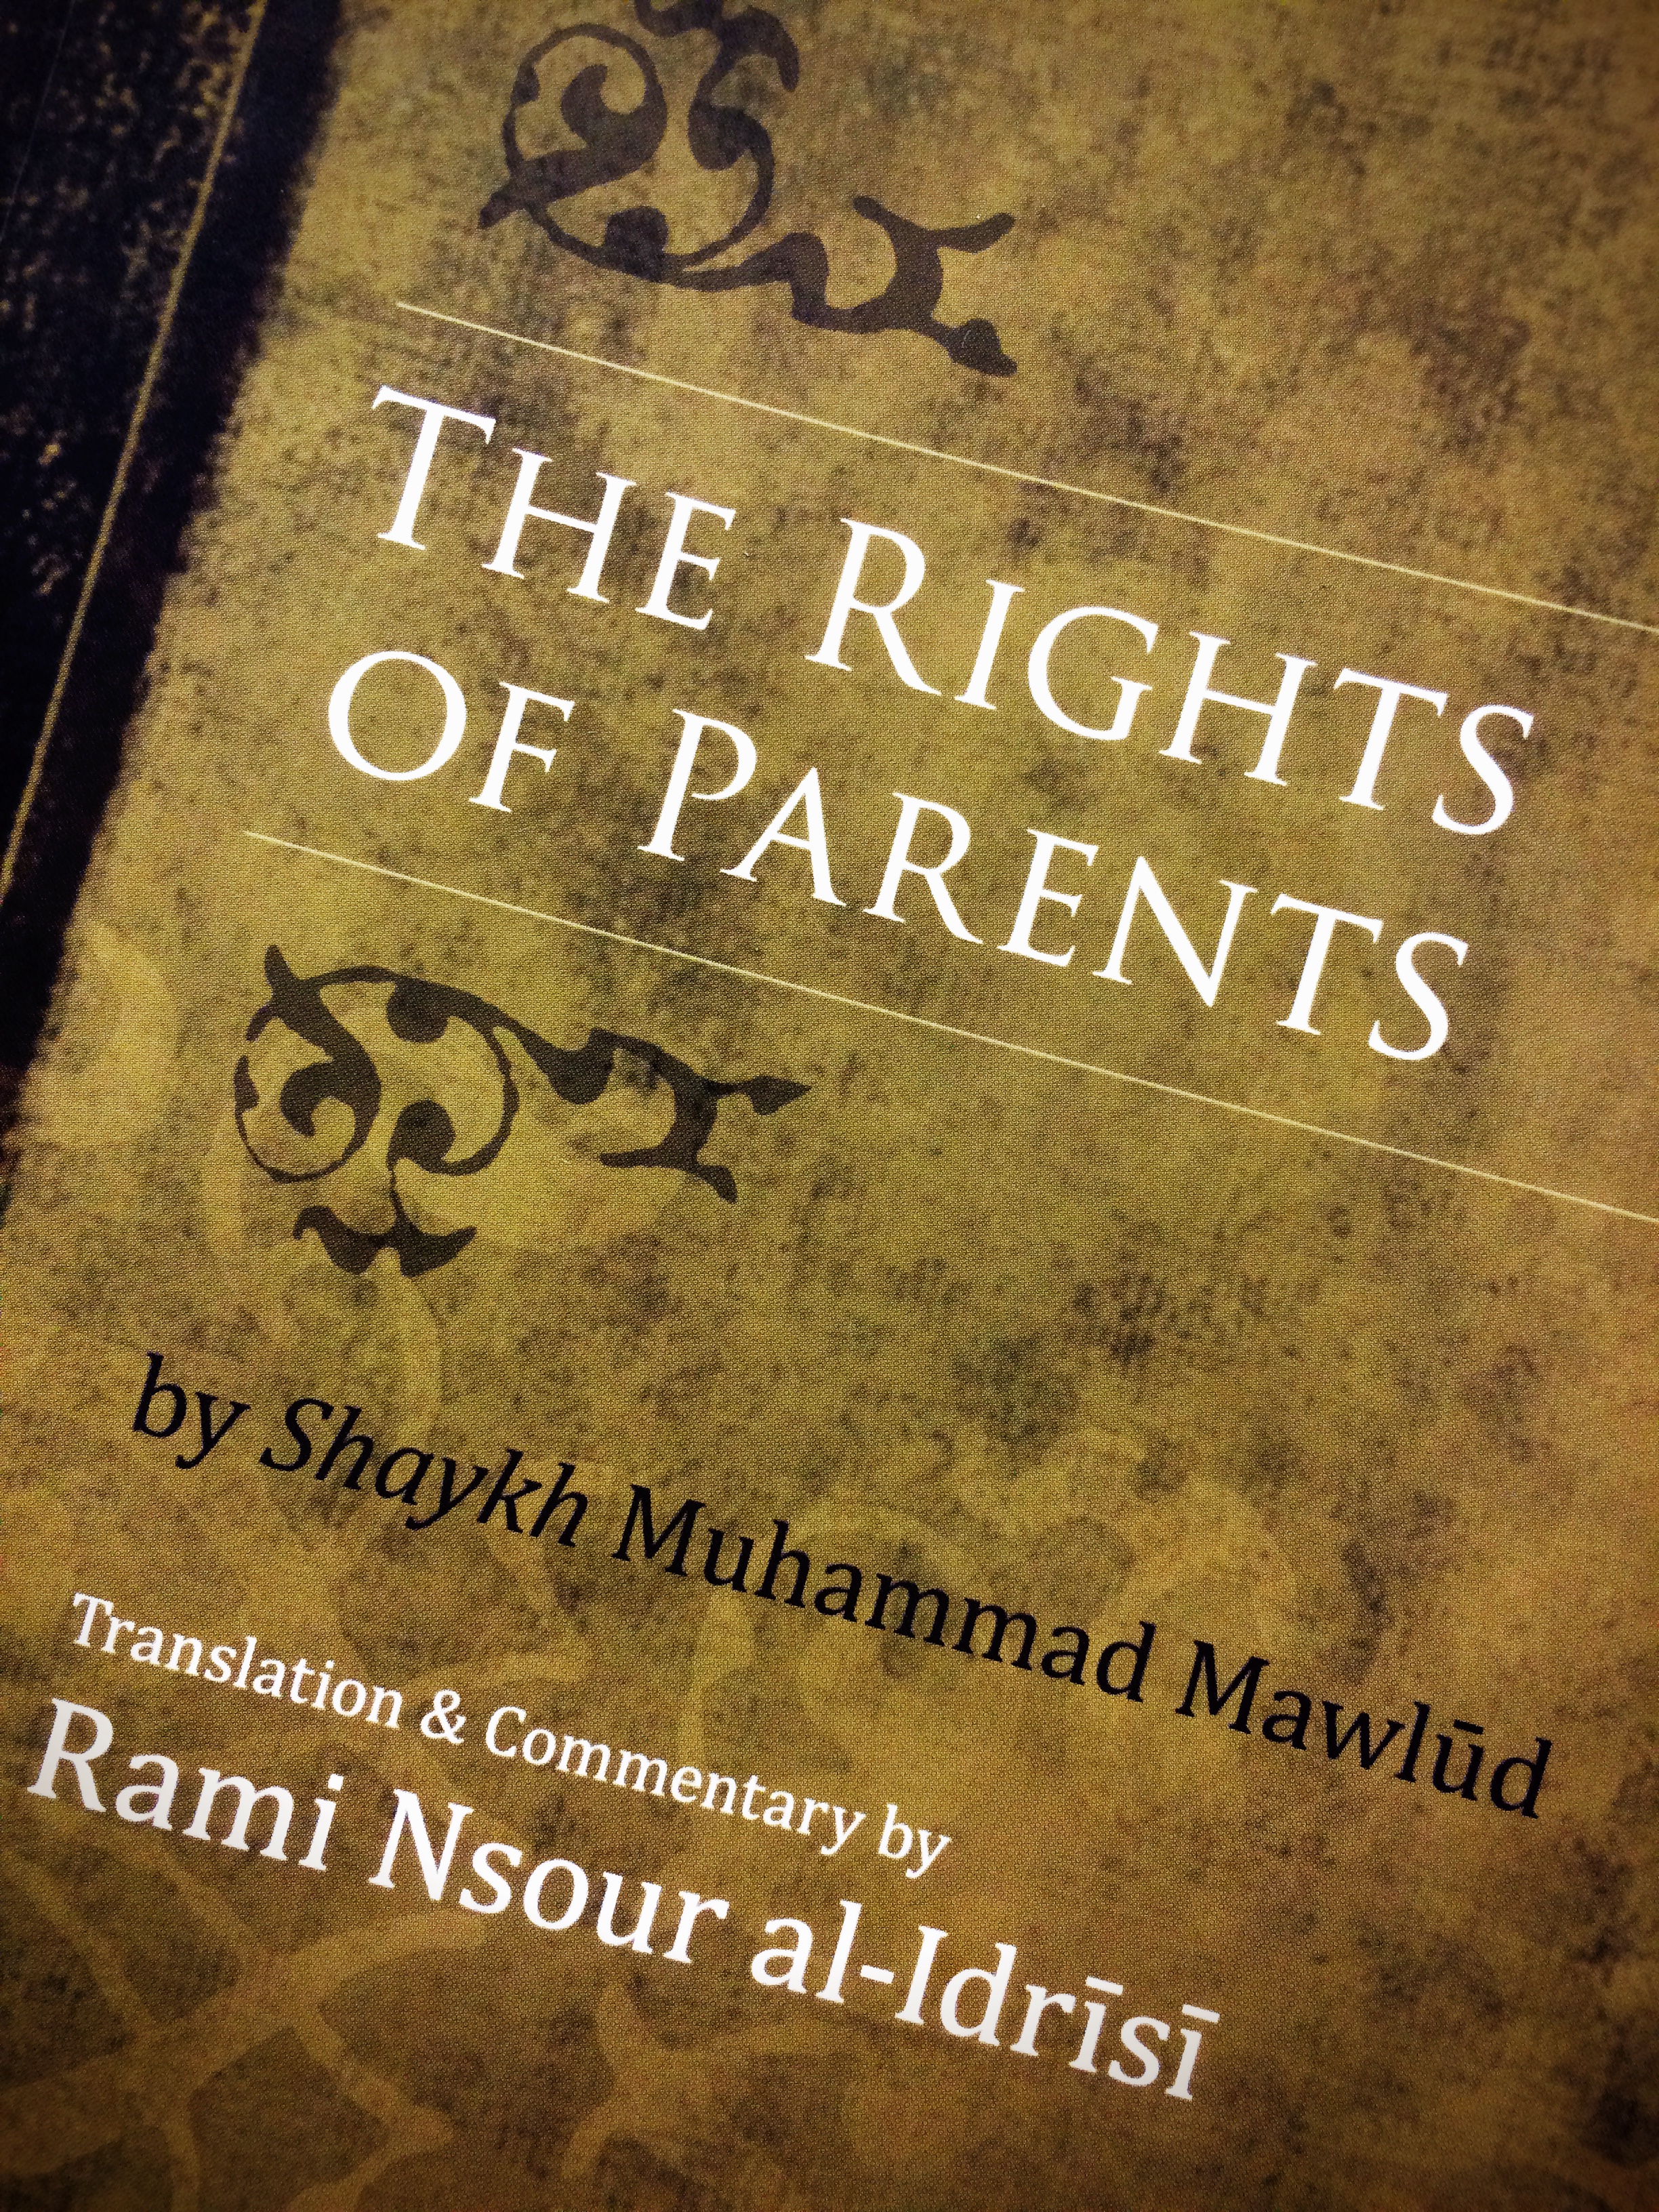 Biography of Shaykh Muhammad Mawlud